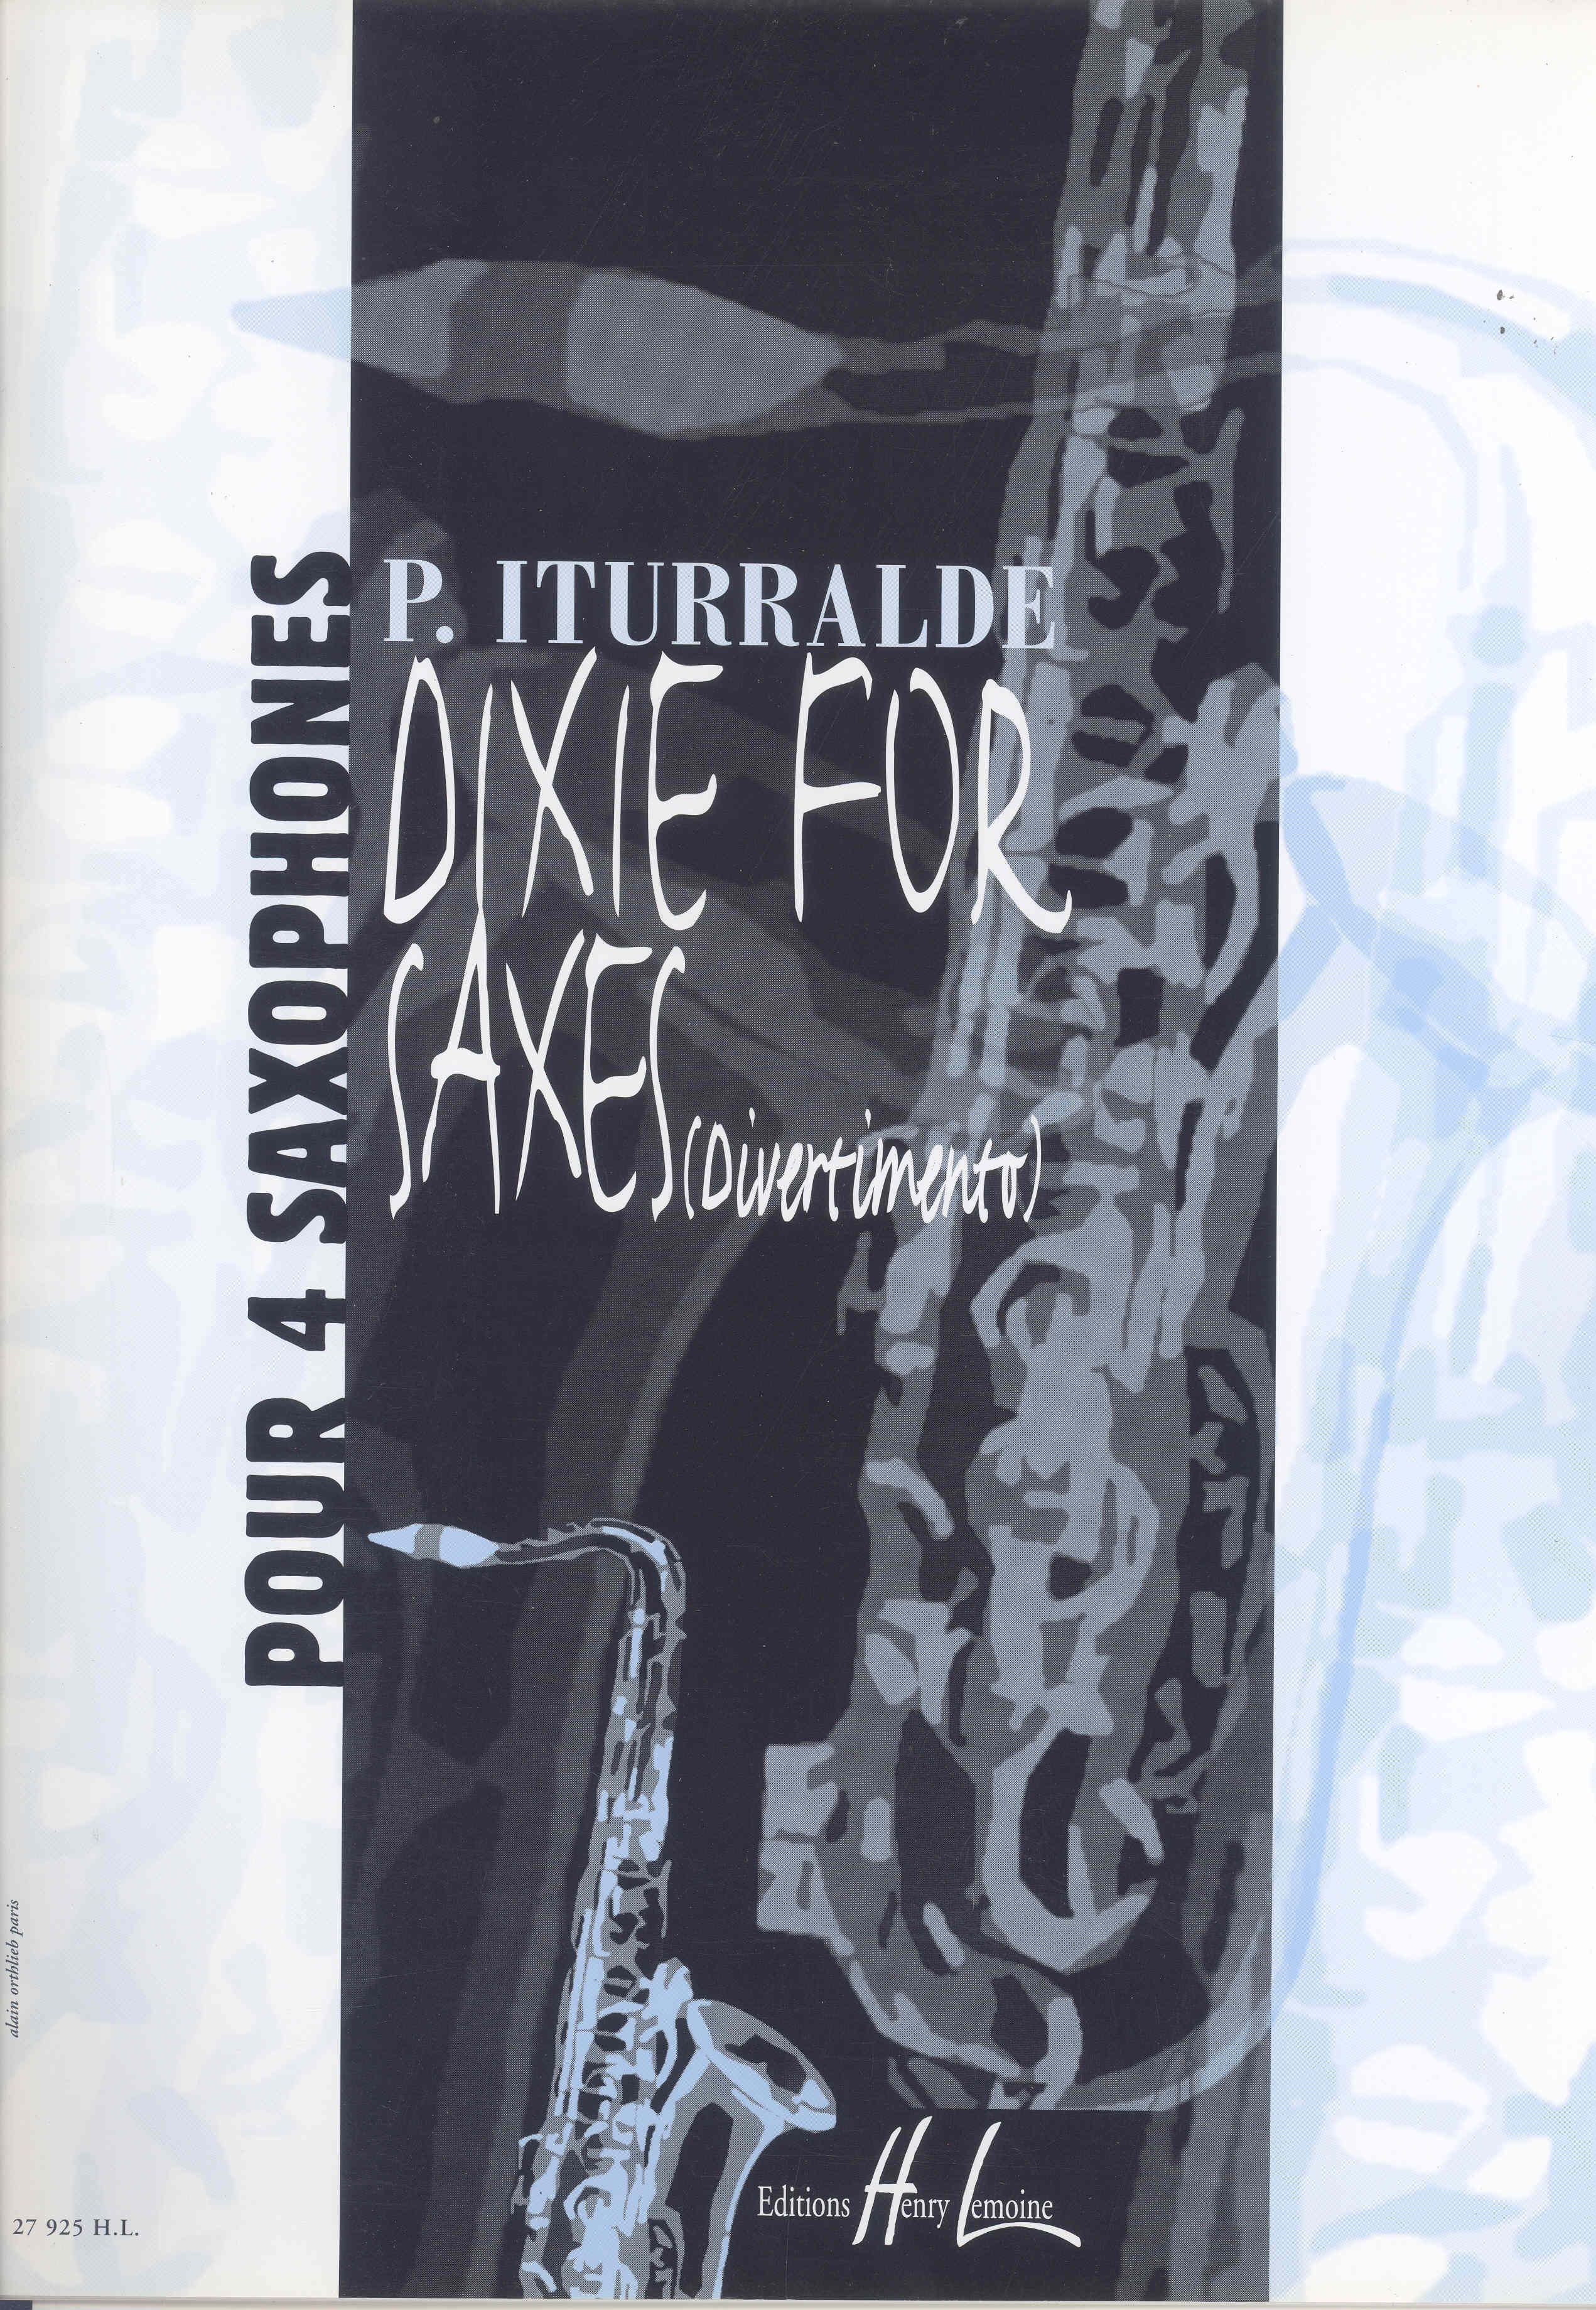 Iturralde, Pedro Dixie For (4)saxes(divertimento) Sheet Music Songbook